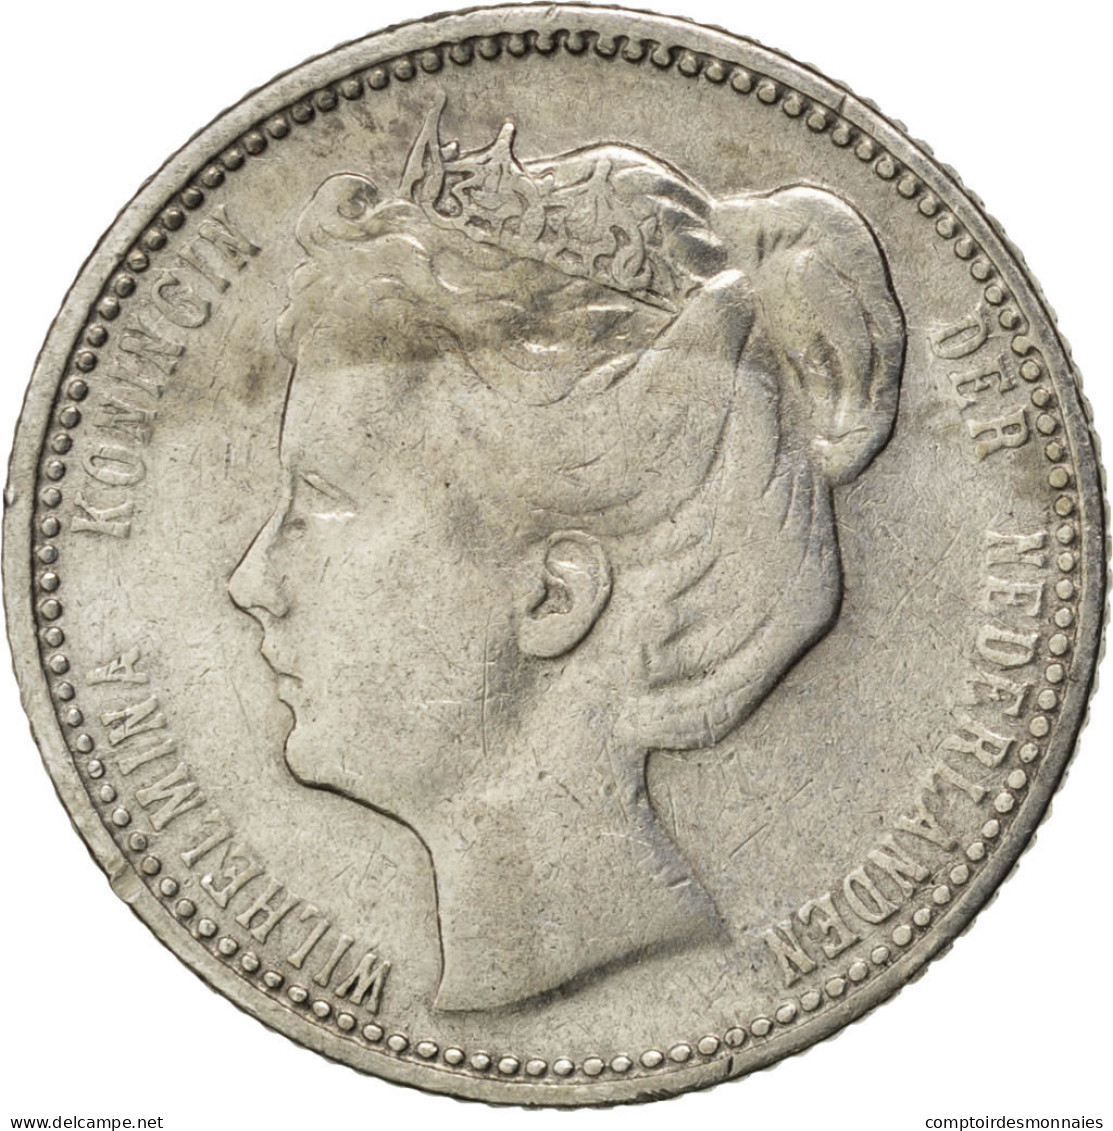 Monnaie, Pays-Bas, Wilhelmina I, 25 Cents, 1904, TTB, Argent, KM:120.2 - 25 Centavos